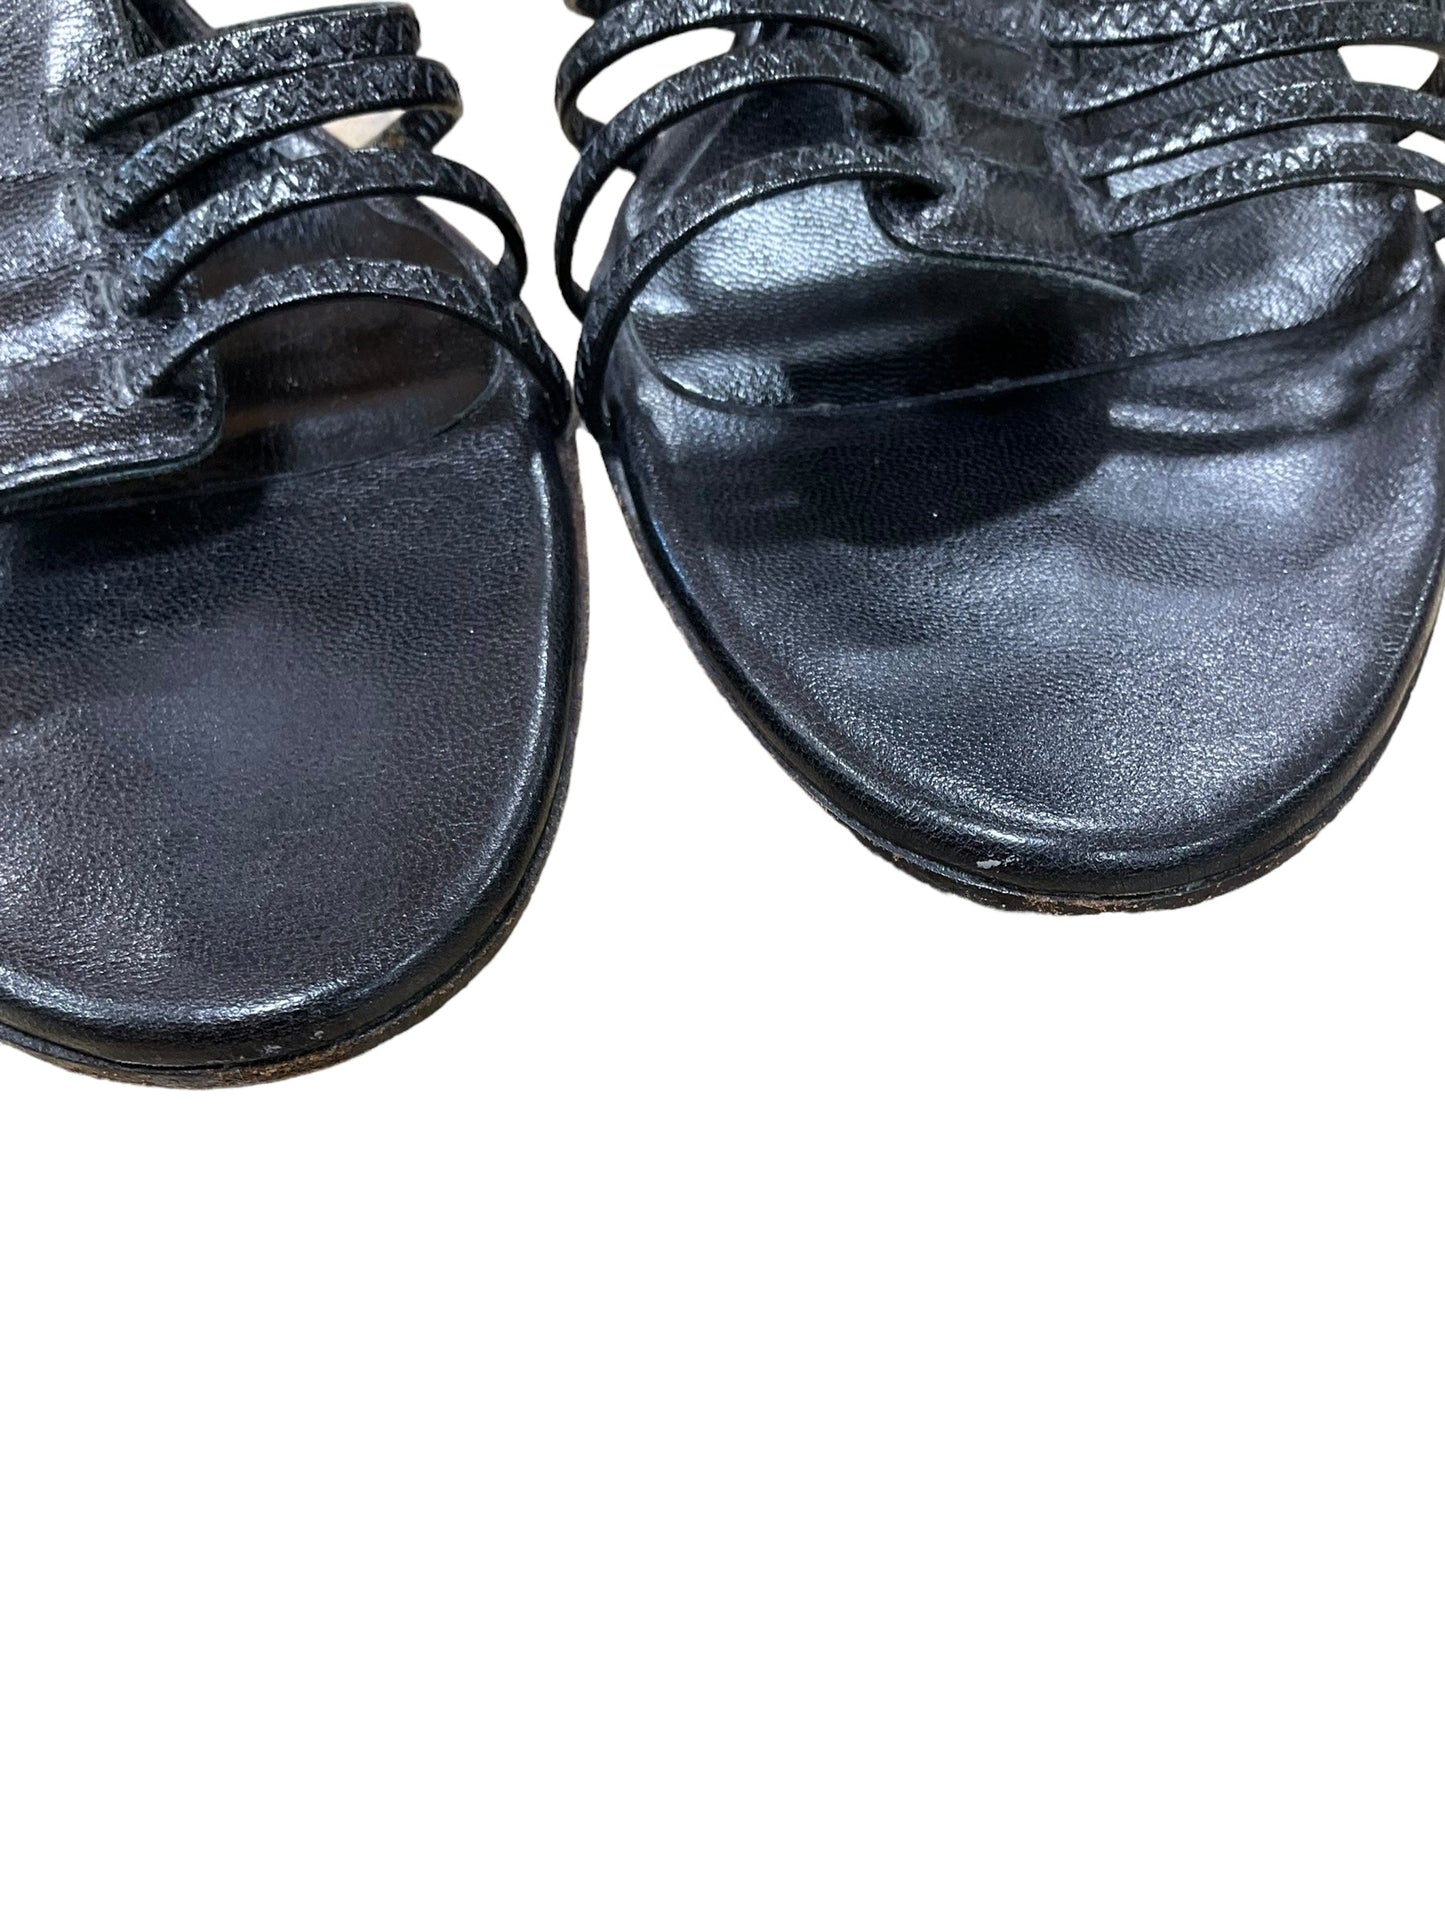 Black Shoes Heels Stiletto Guess, Size 7